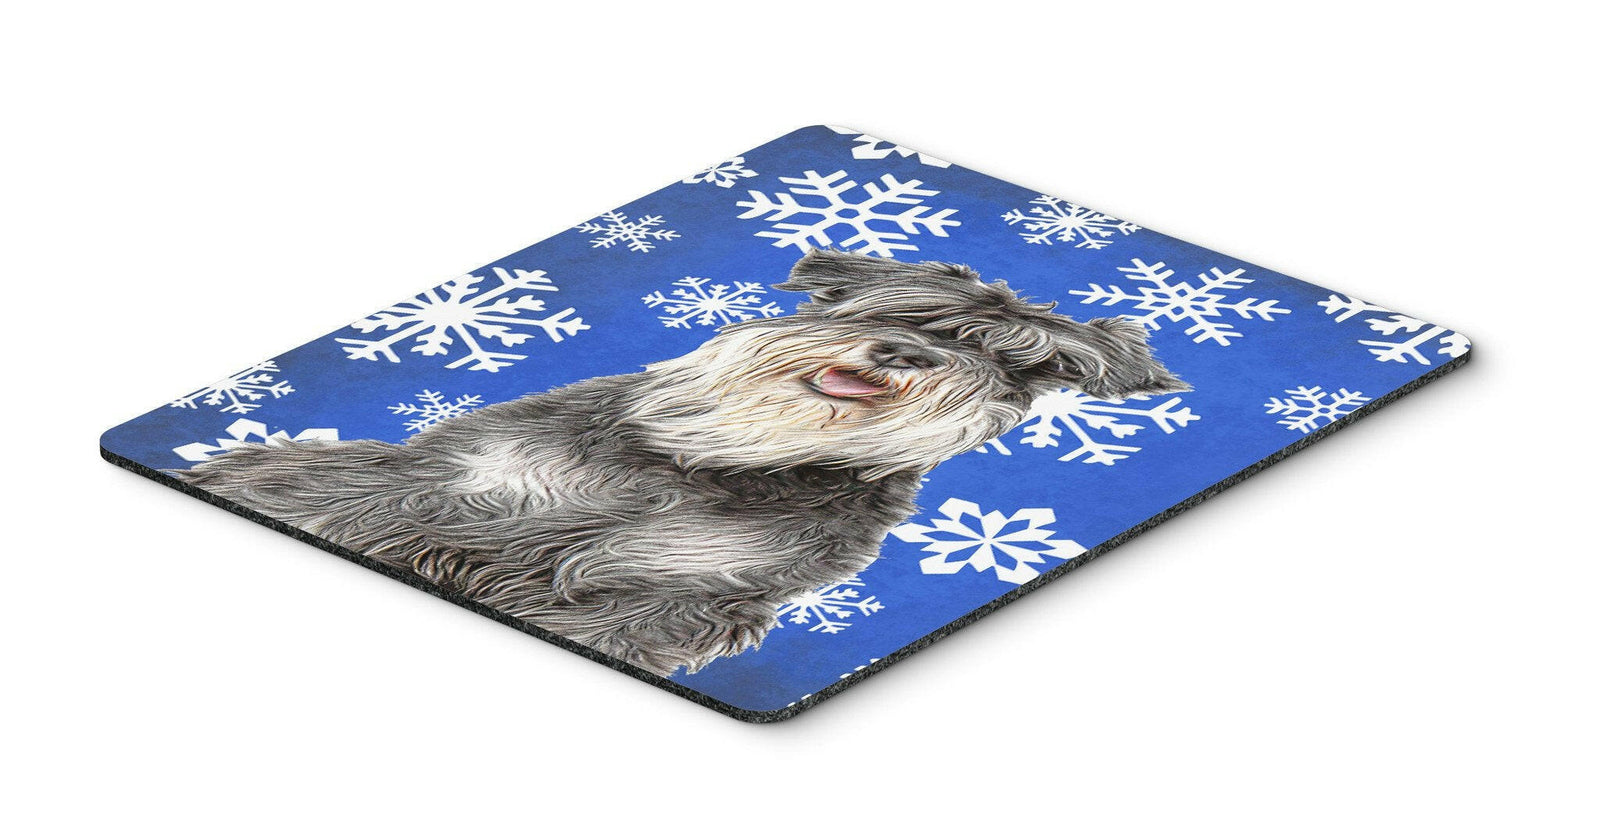 Winter Snowflakes Holiday Schnauzer Mouse Pad, Hot Pad or Trivet KJ1178MP by Caroline's Treasures